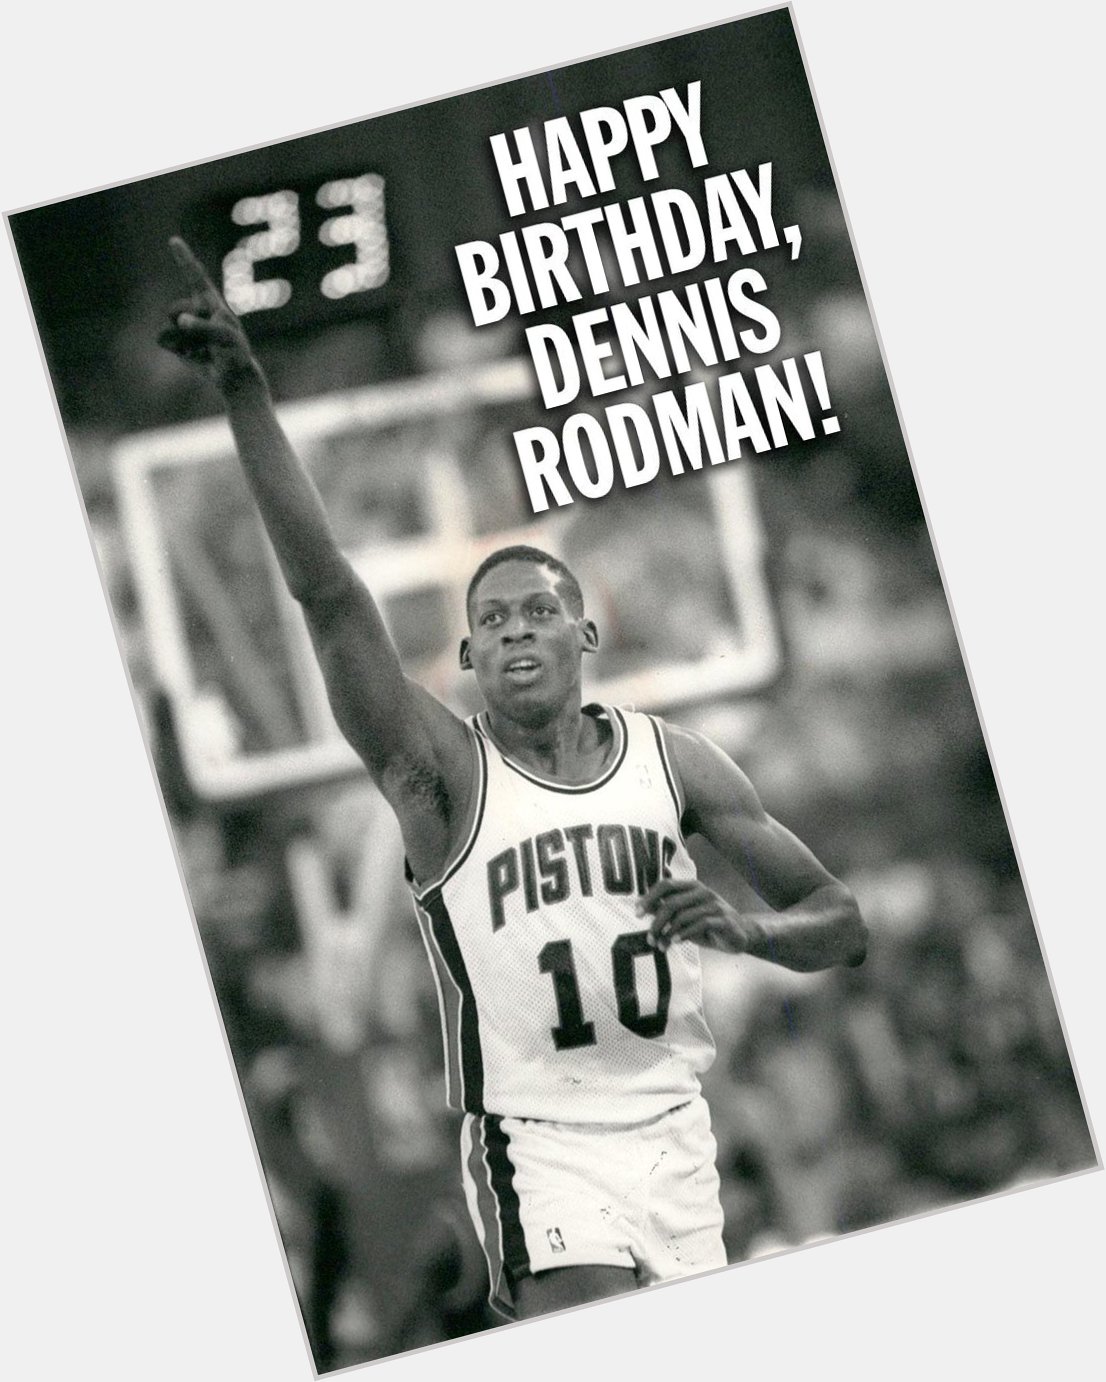 Happy birthday, Dennis Rodman!  